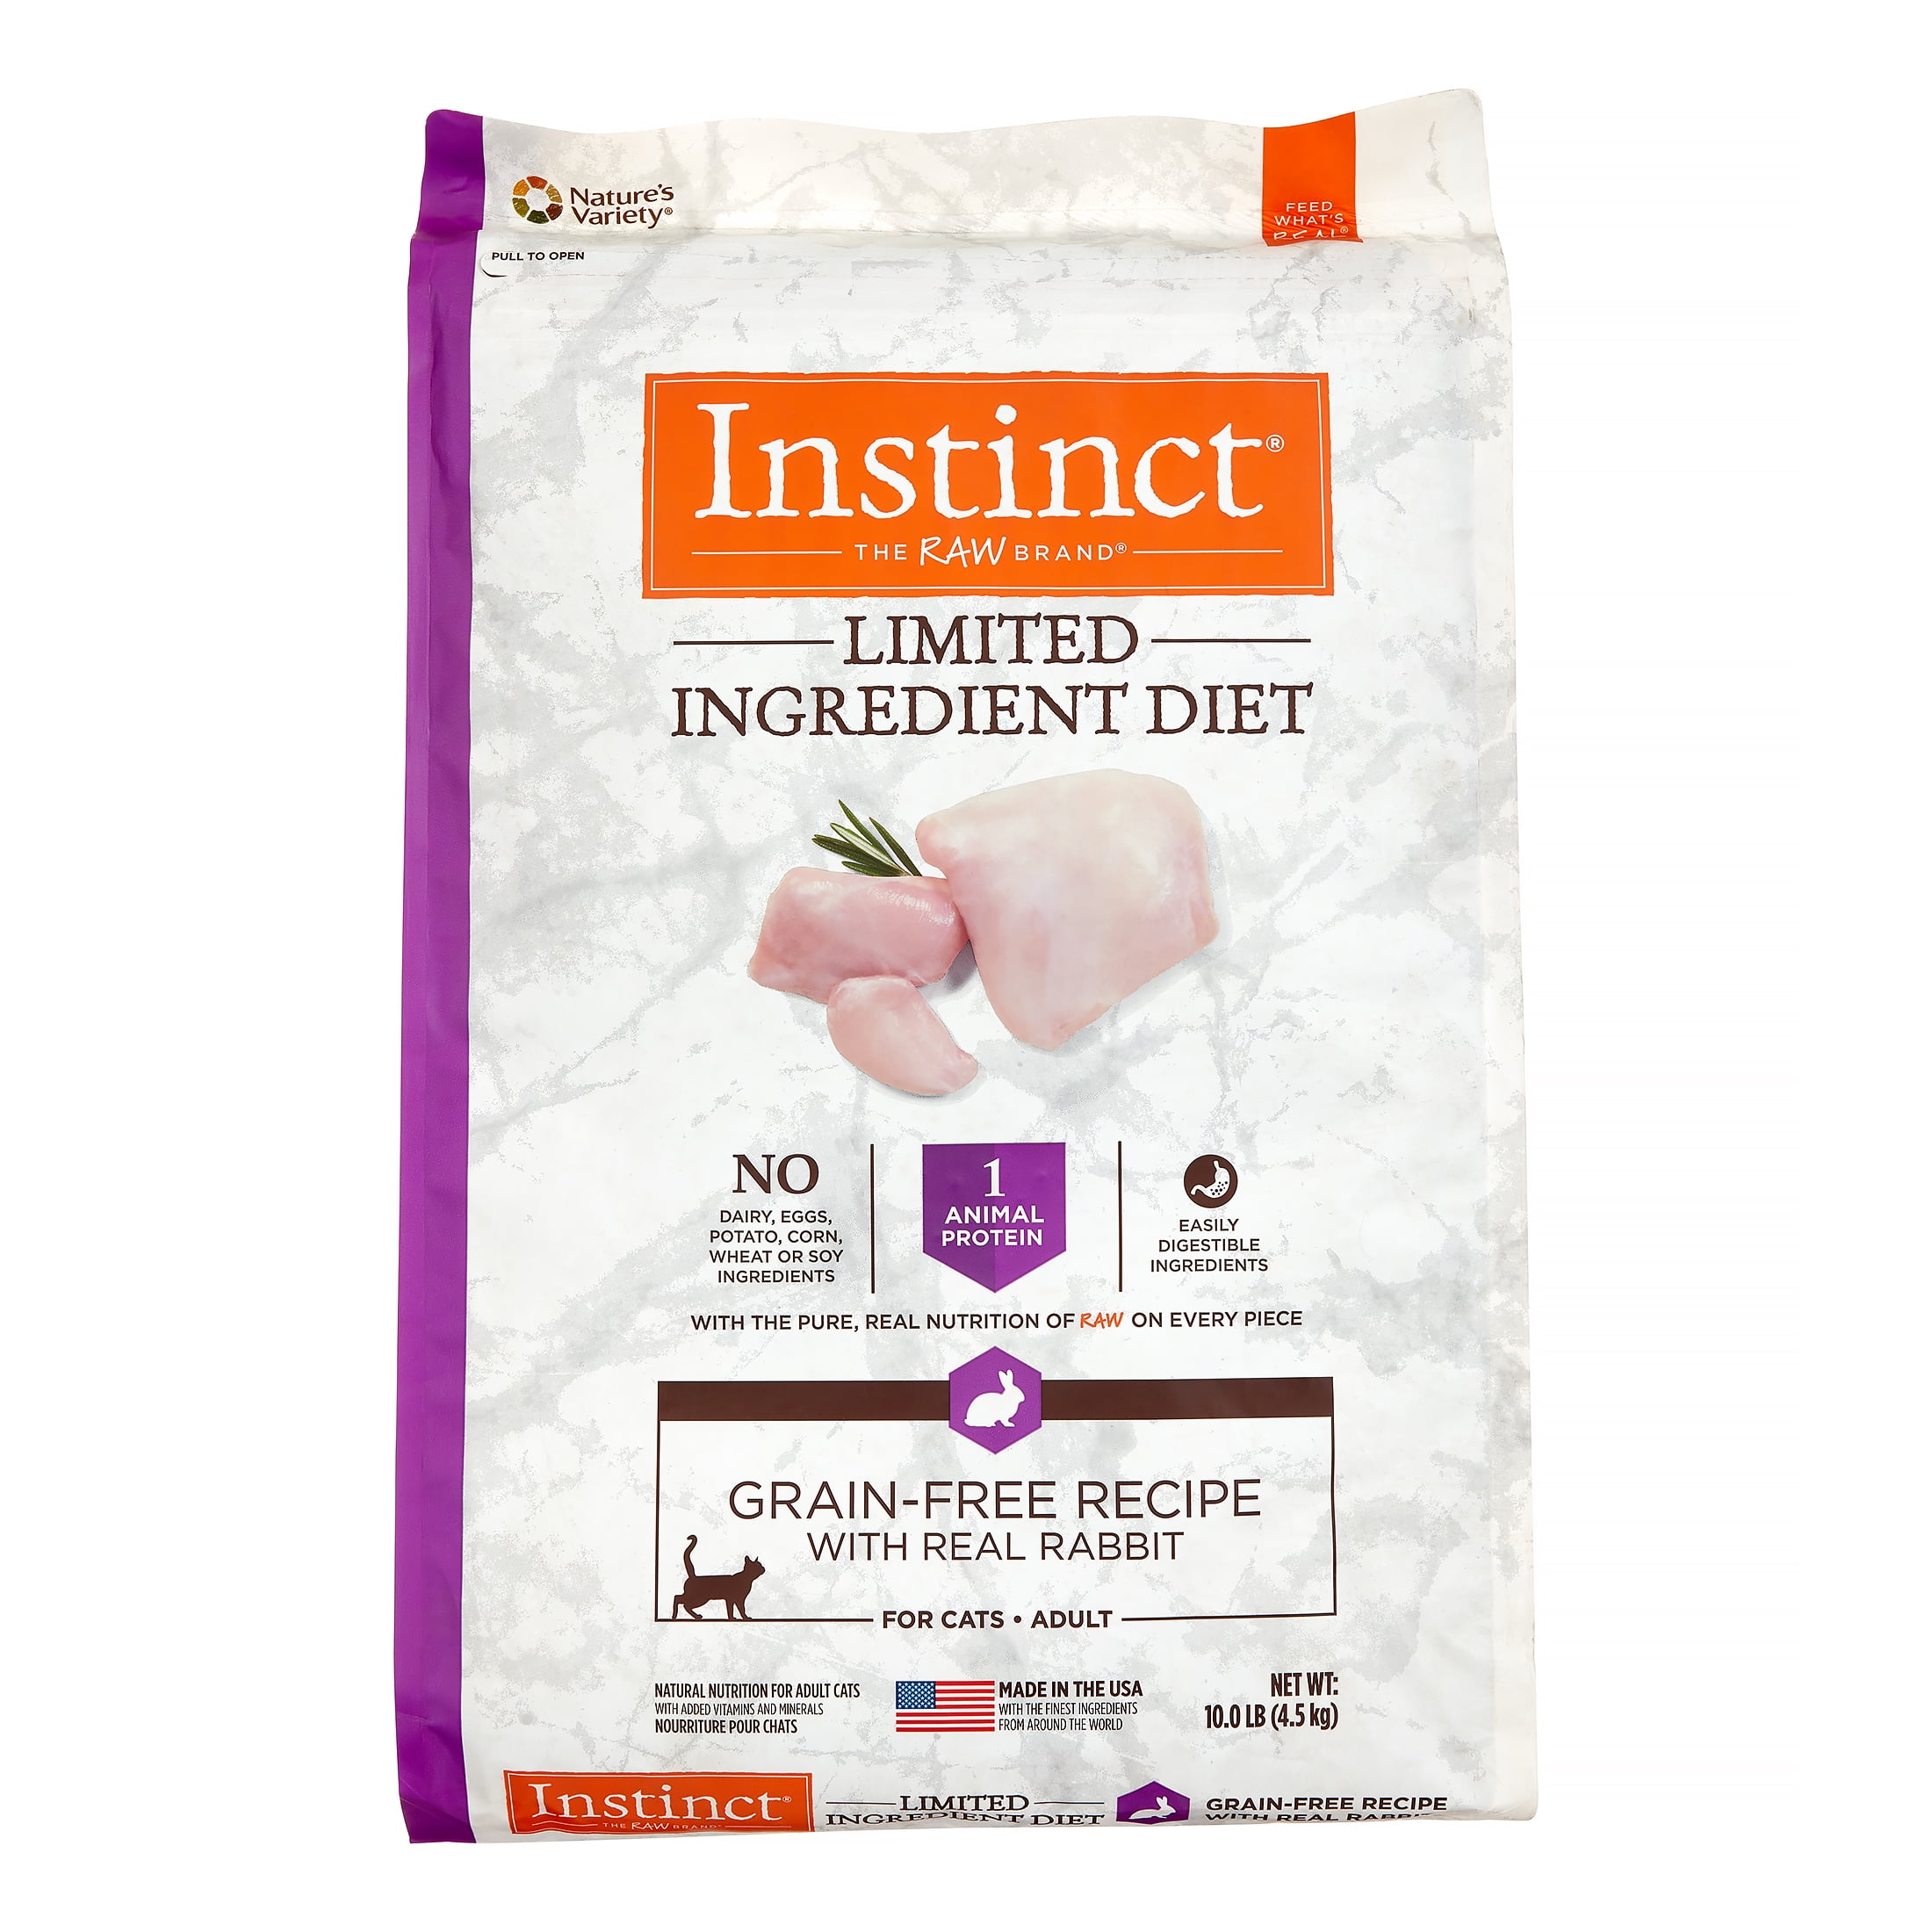 Instinct Limited Ingredient Diet GrainFree Recipe with Real Rabbit